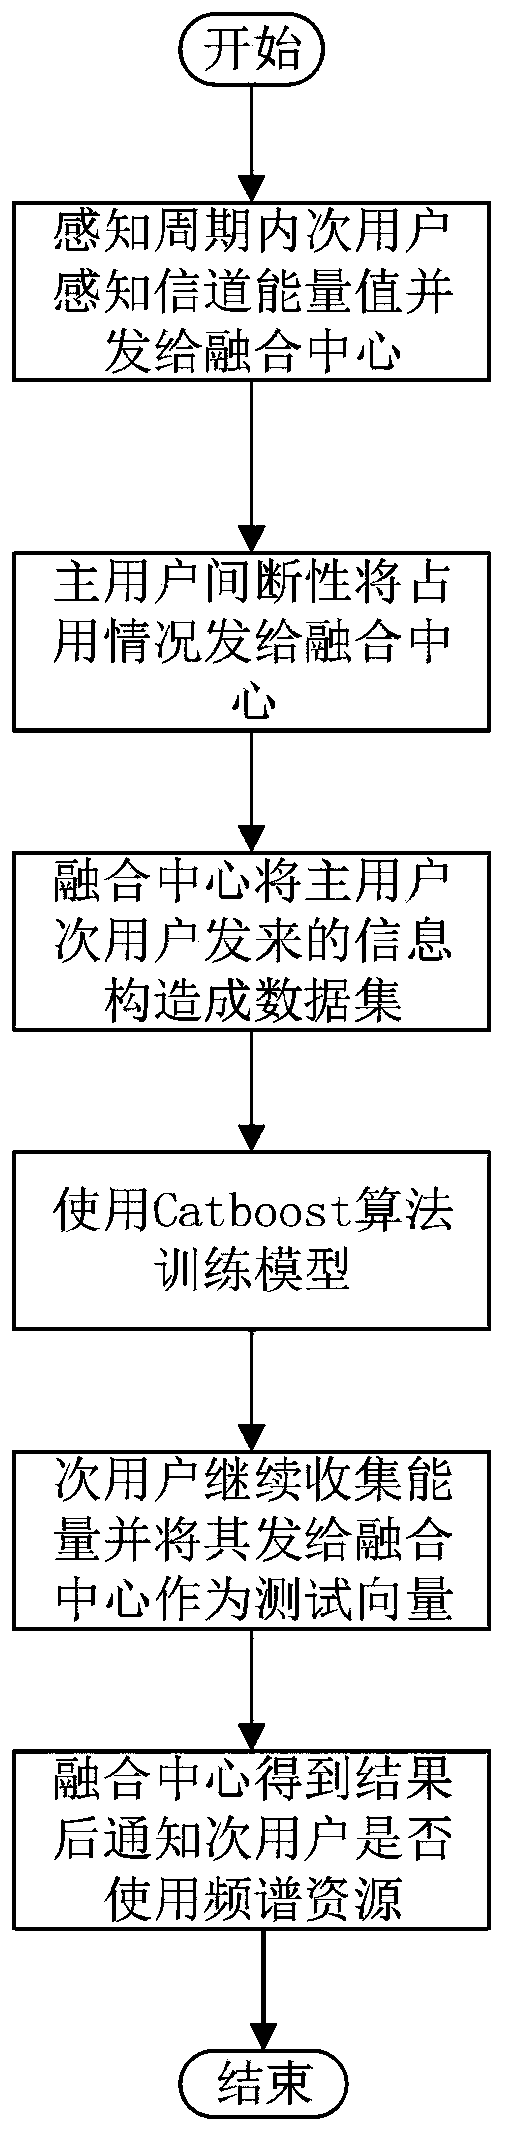 Channel environment self-adaptive spectrum sensing method based on Catboost algorithm